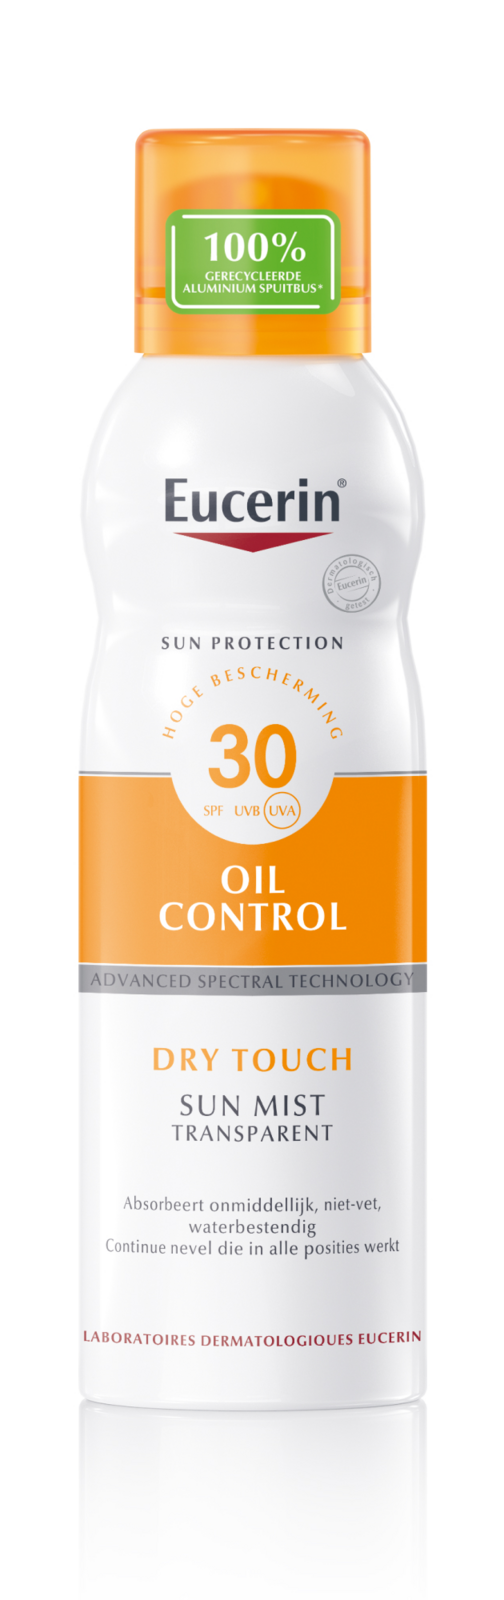 Image of Eucerin Sun Oil Control Mist Transparent Dry Touch SPF 30 